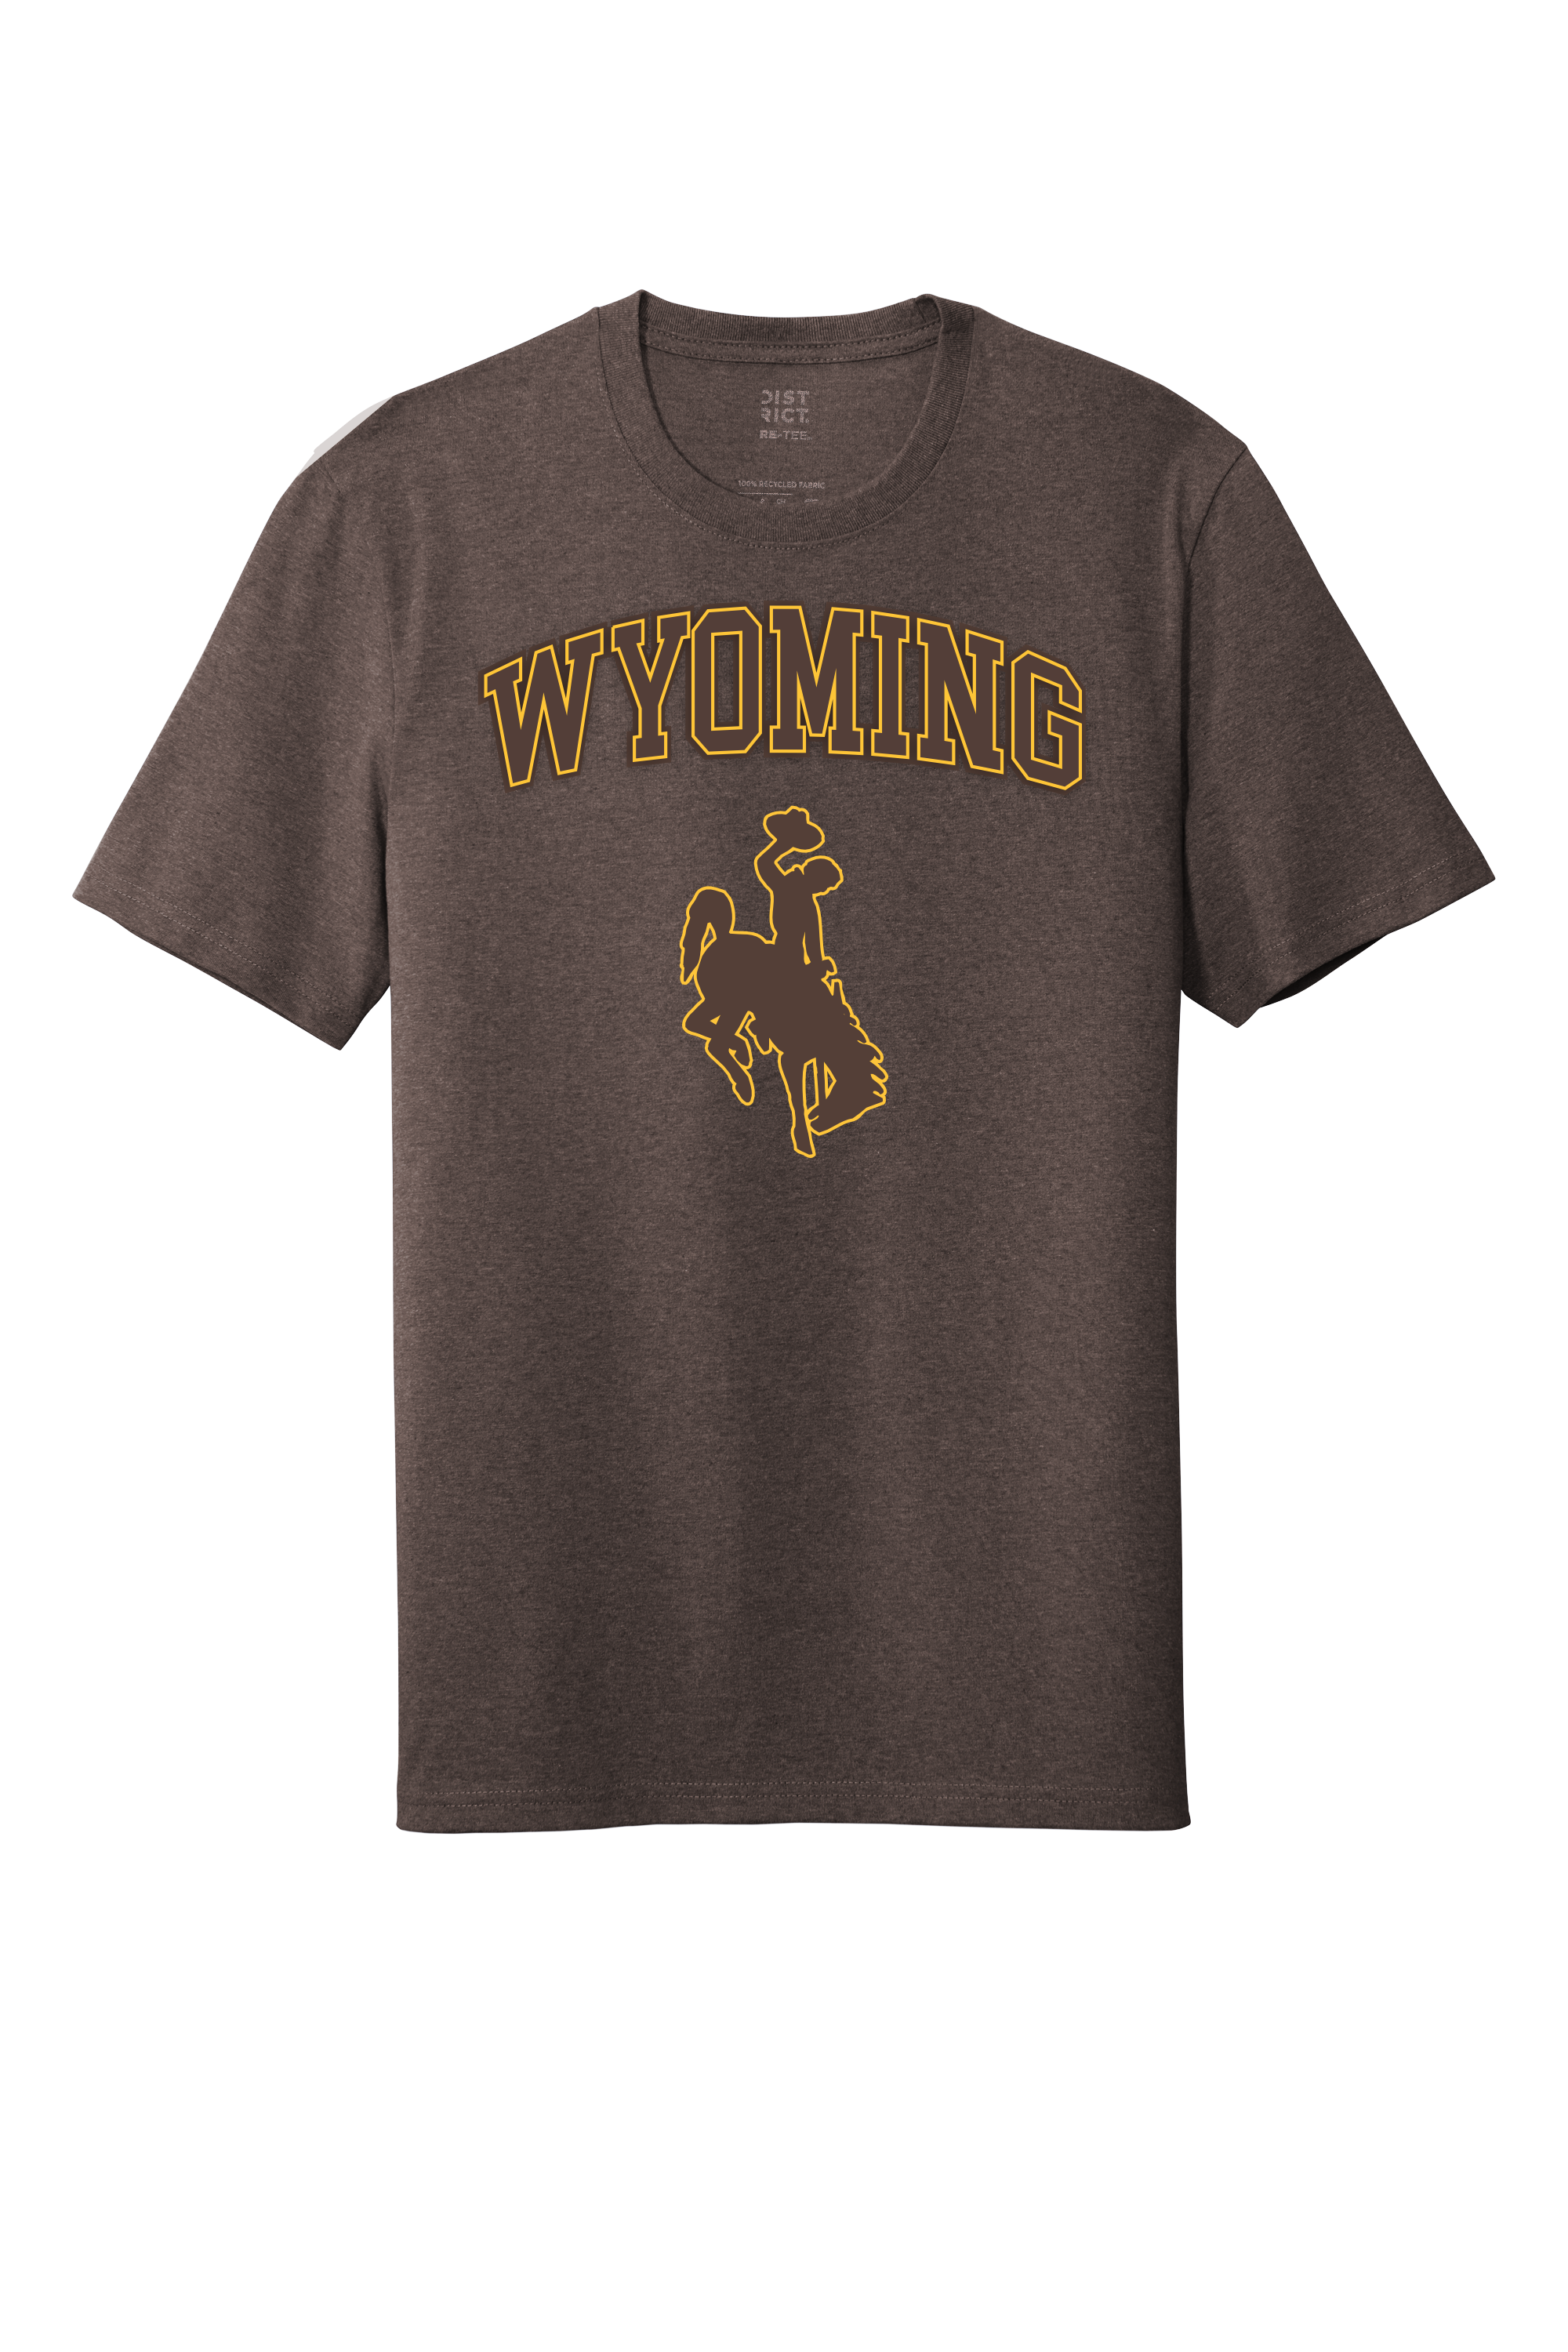  University of Wyoming T-shirt- brown